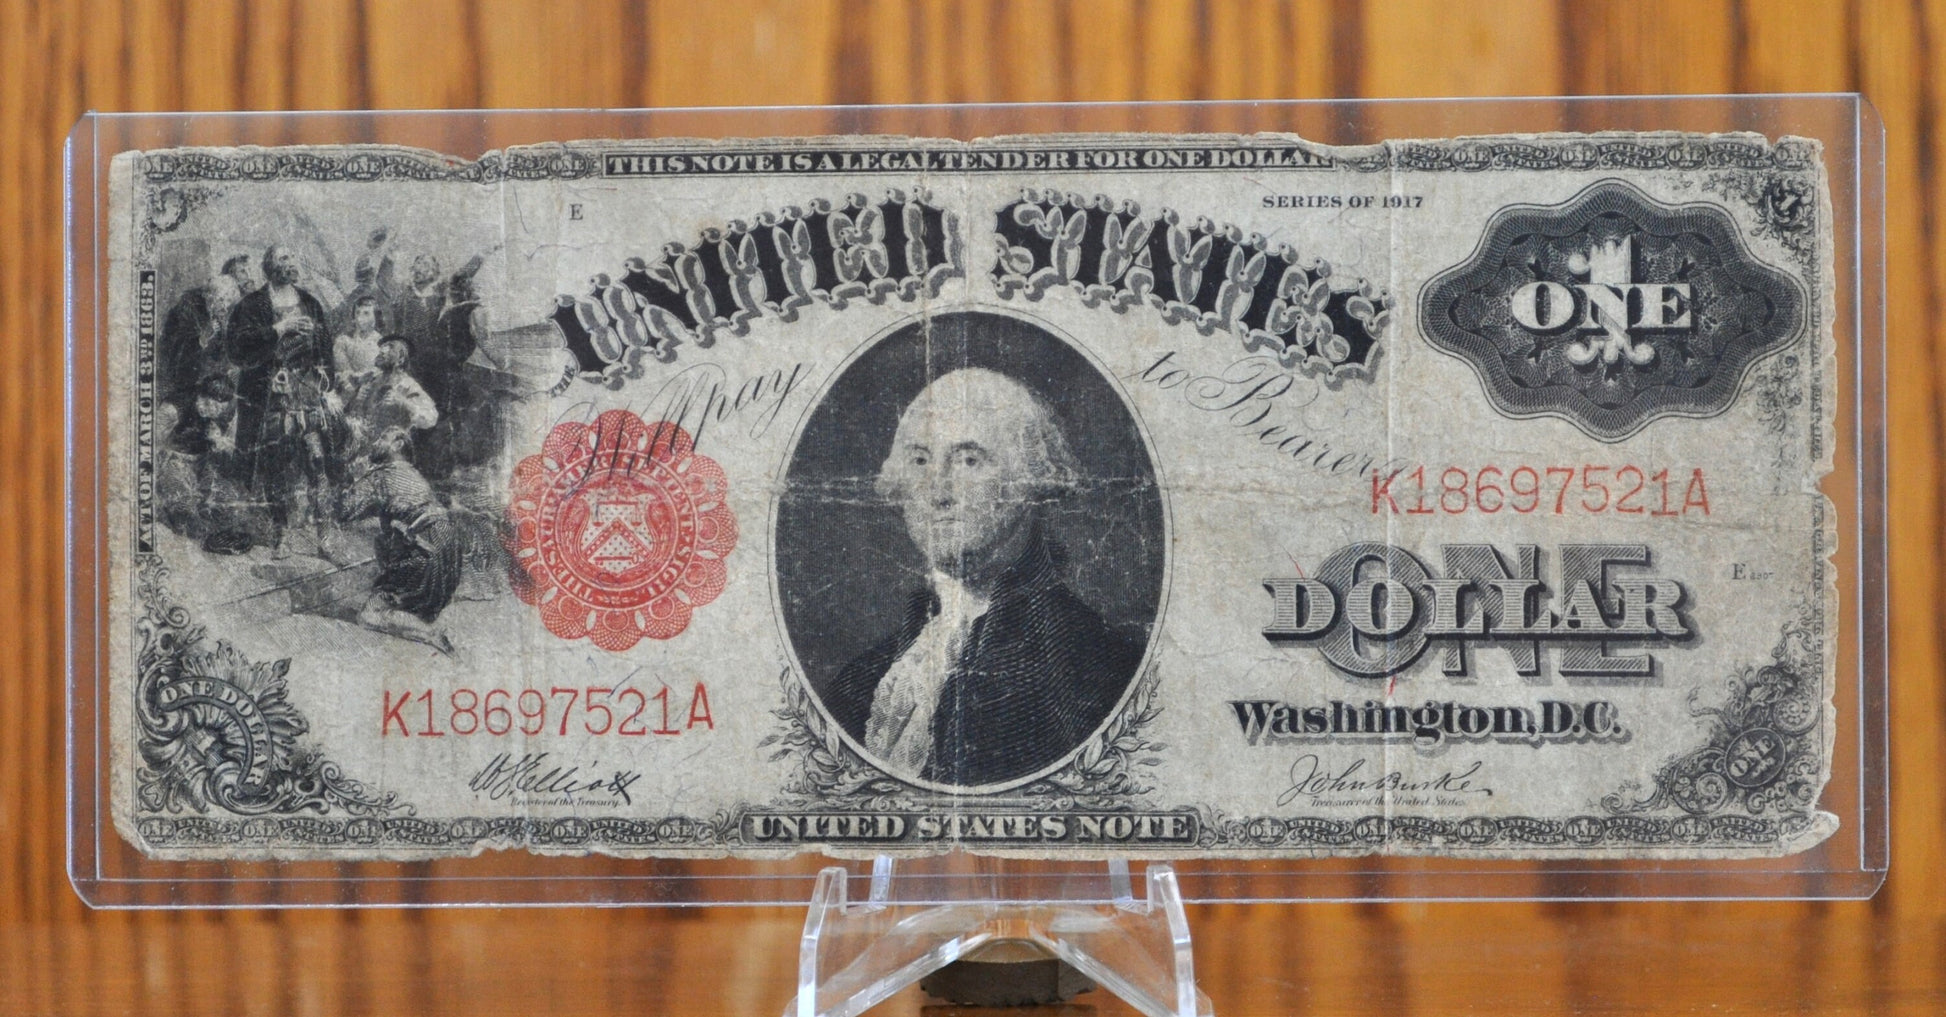 1917 1 Dollar Bill Legal Tender - G (Good) Grade / Condition - 1917 Horse Blanket Note 1 Dollar Bill Large 1917 Fr#37 Fr37, Affordable Note